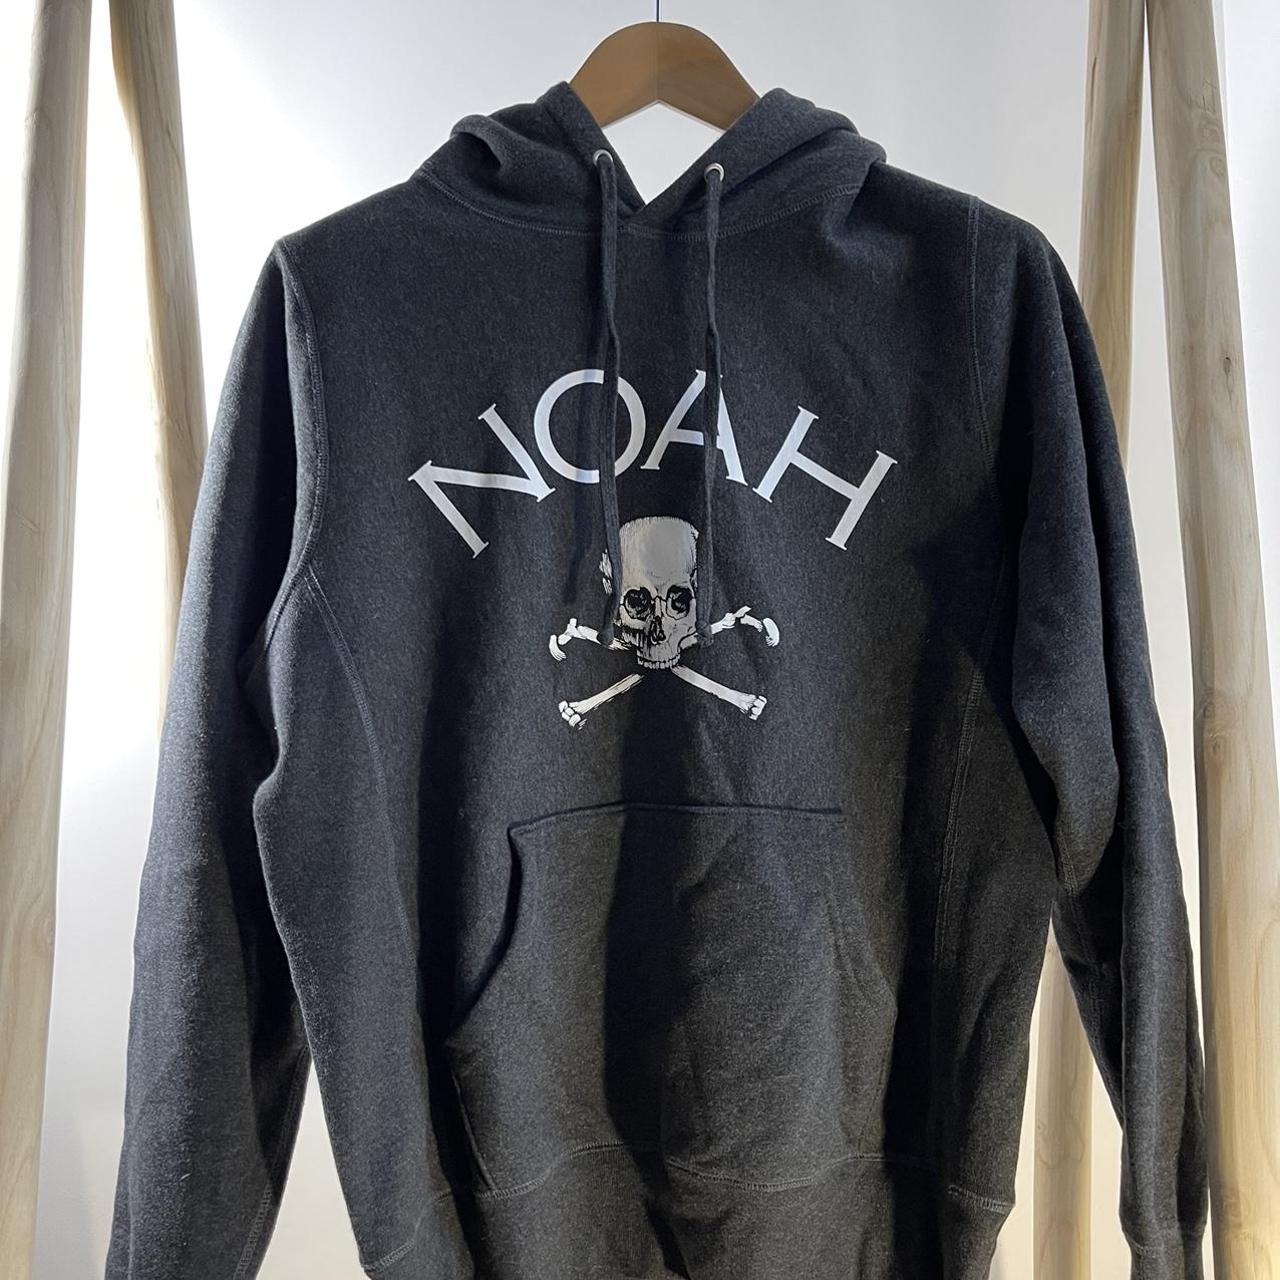 Noah Jolly Roger Hoodie - Noah Skull Logo and... - Depop